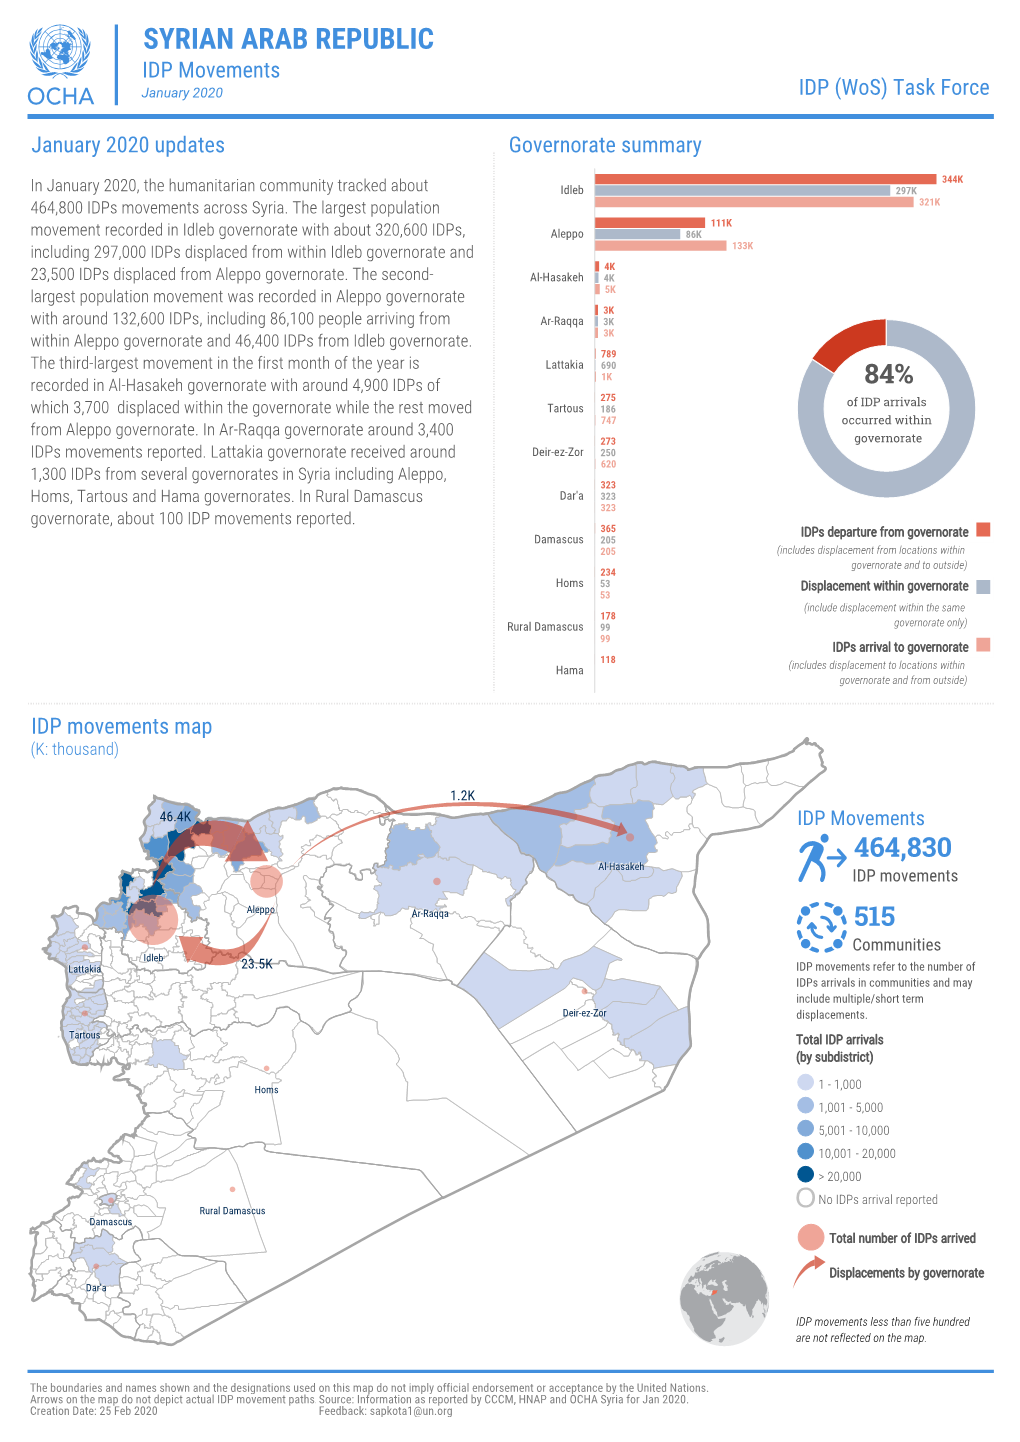 SYRIAN ARAB REPUBLIC IDP Movements January 2020 IDP (Wos) Task Force